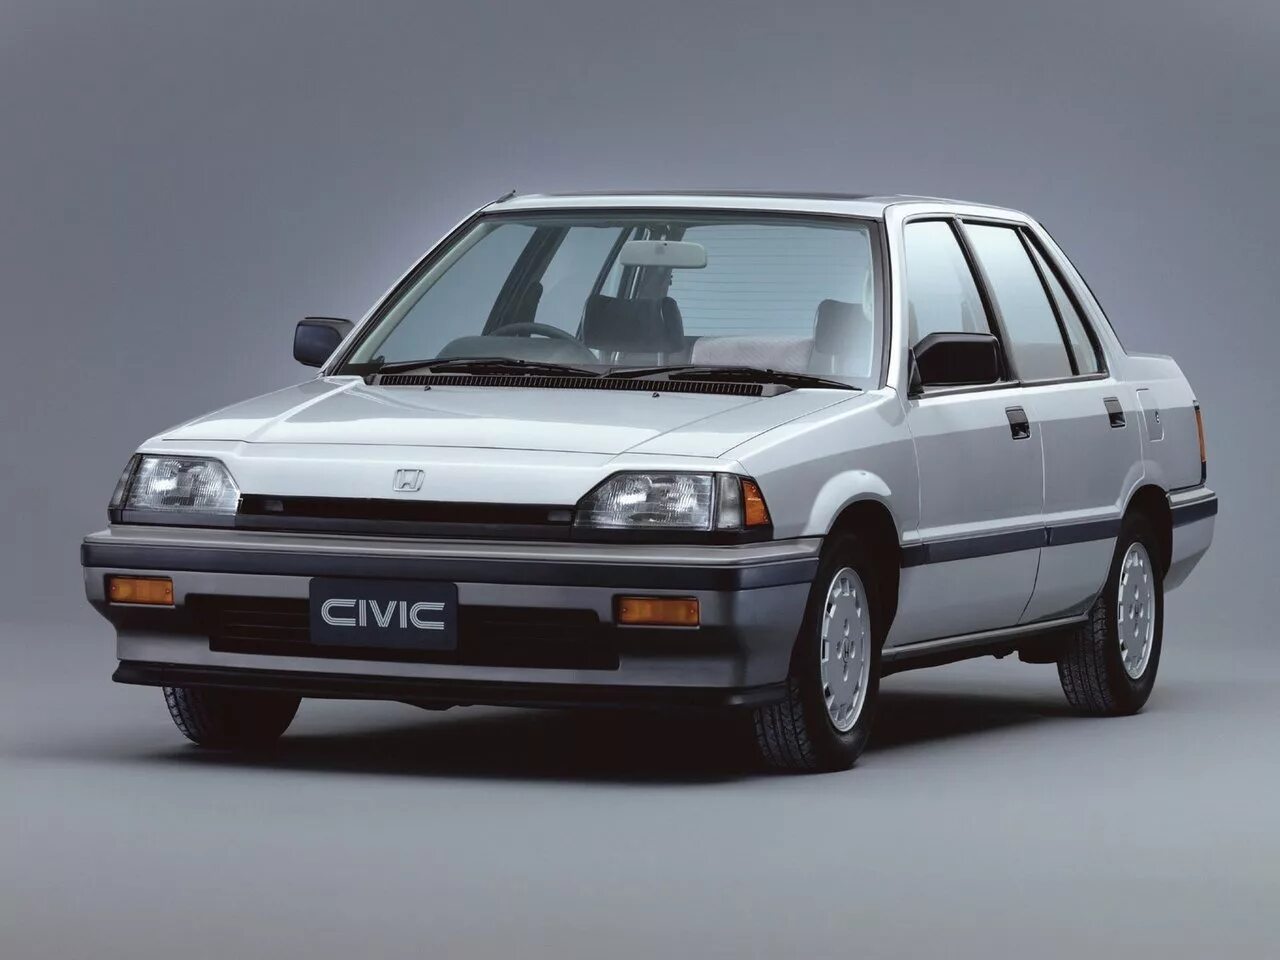 Honda Civic 1983-1987. Honda Civic 1983 седан. Хонда Цивик 3 седан. Honda Civic sedan 1983. Старые honda